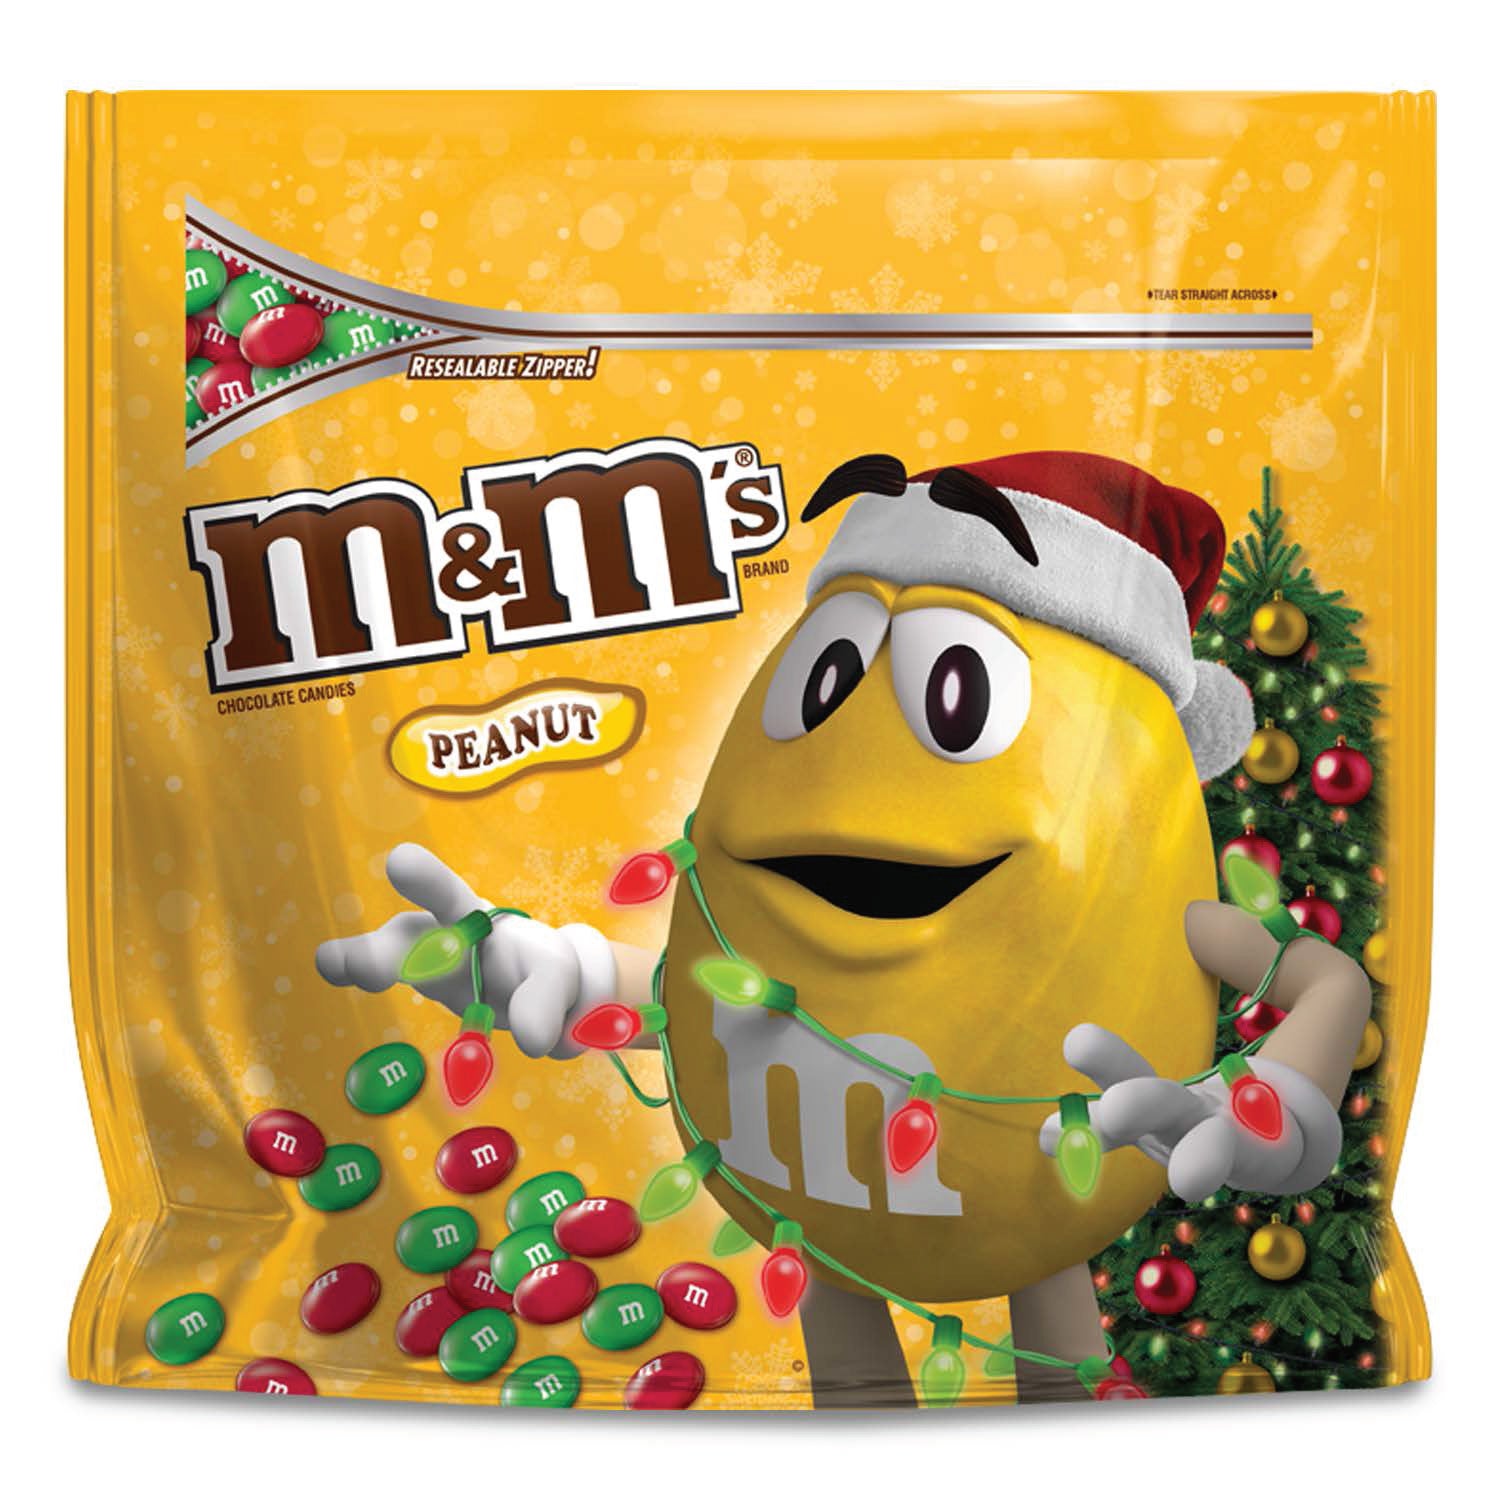 M&M'S Christmas Gift Peanut Milk Chocolate Candy Bag, 38 oz - Food